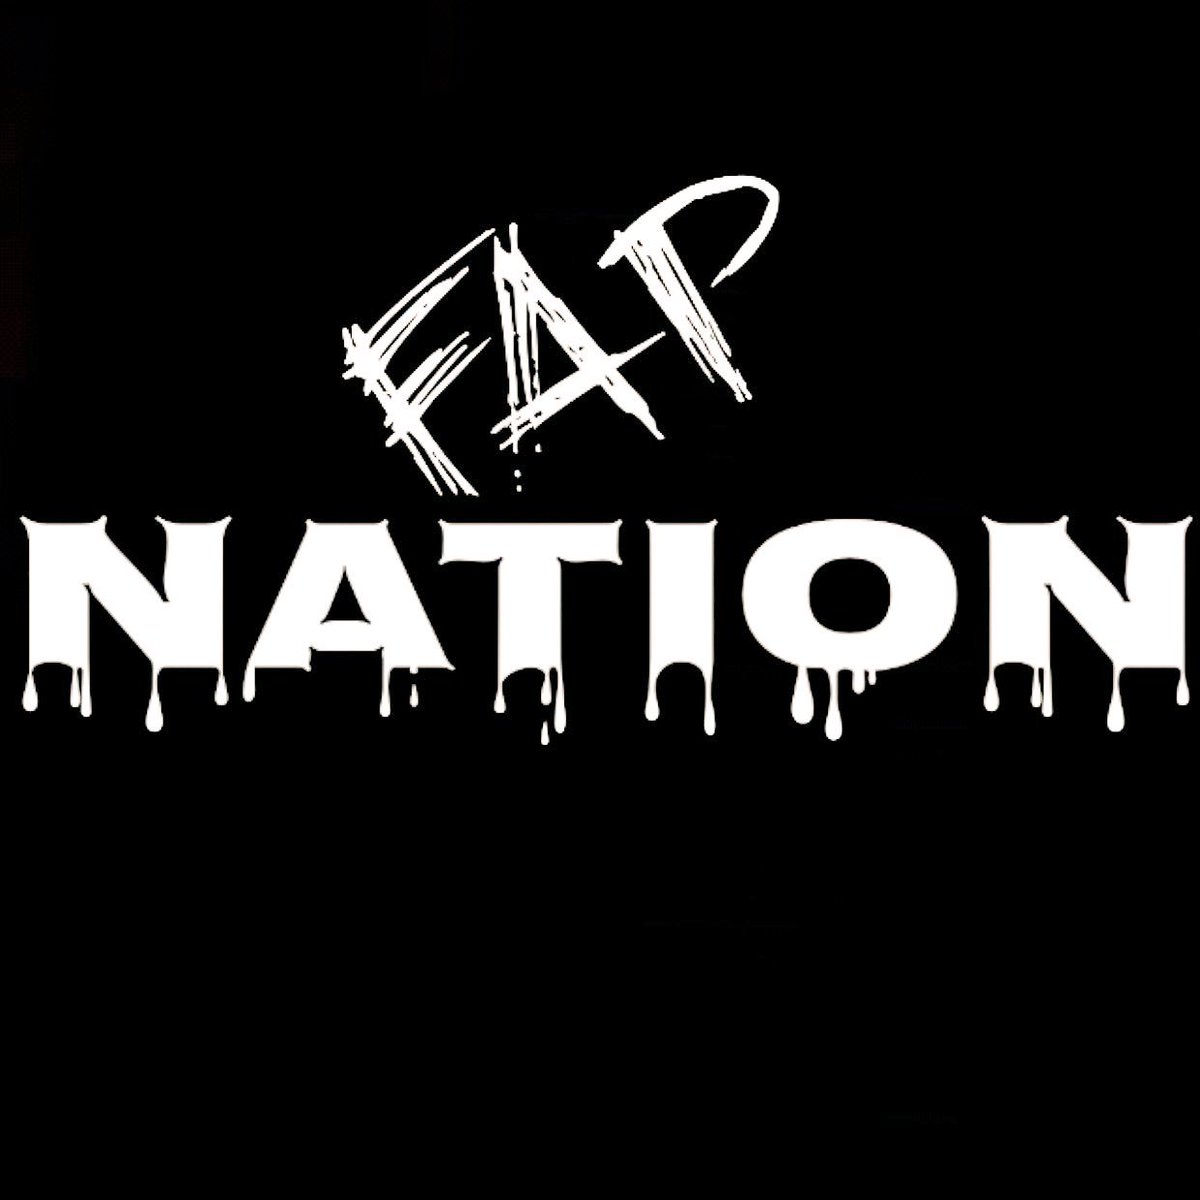 fap nation superpowered